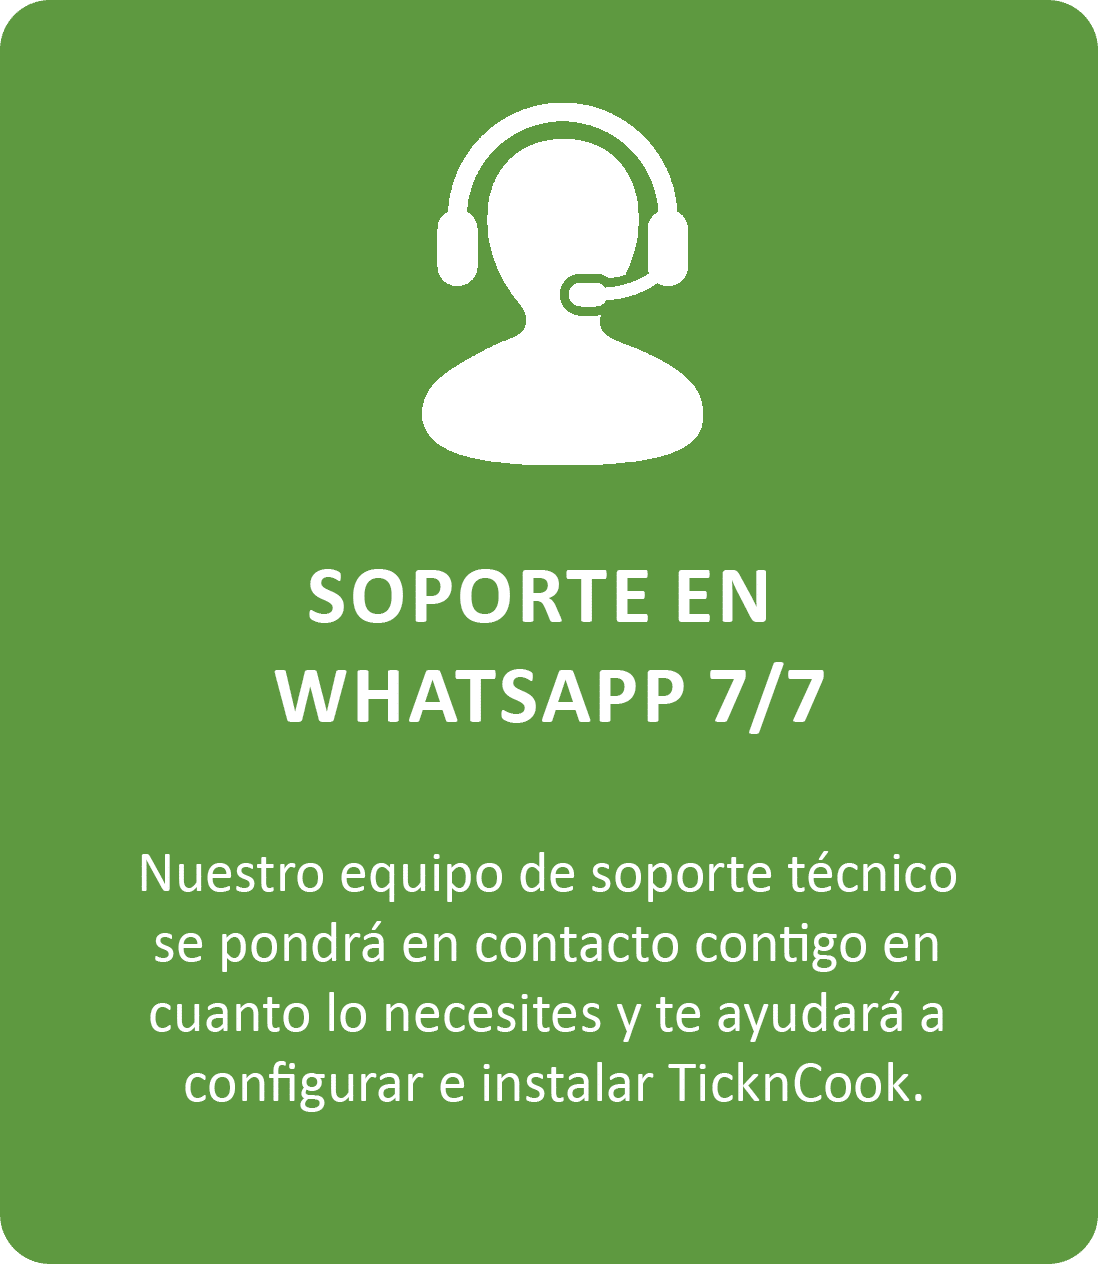 Support Whatsapp 7 jours sur 7